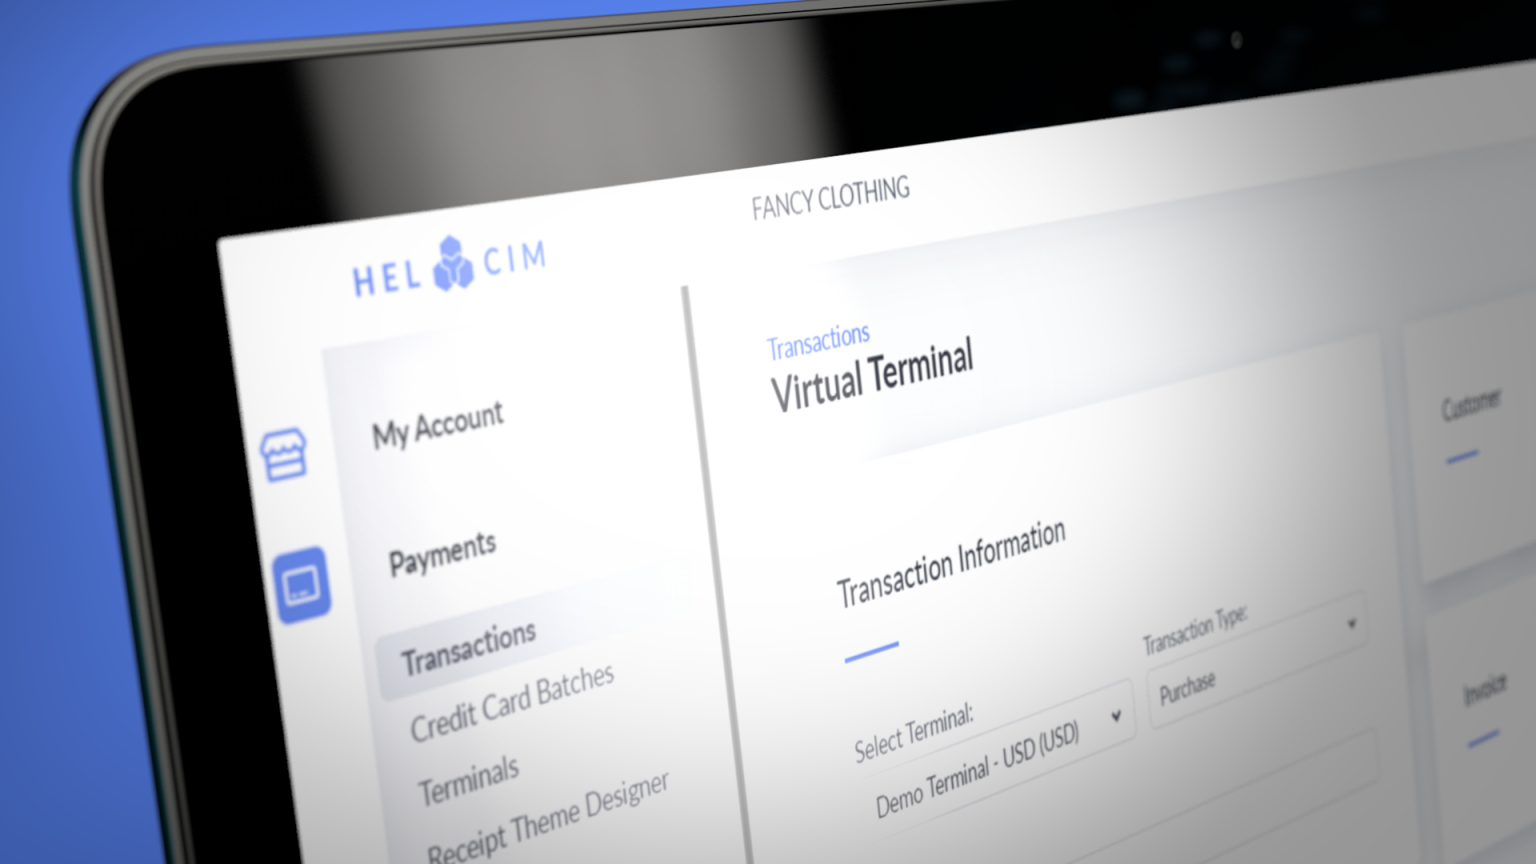 Helcim's virtual terminal on a laptop screen